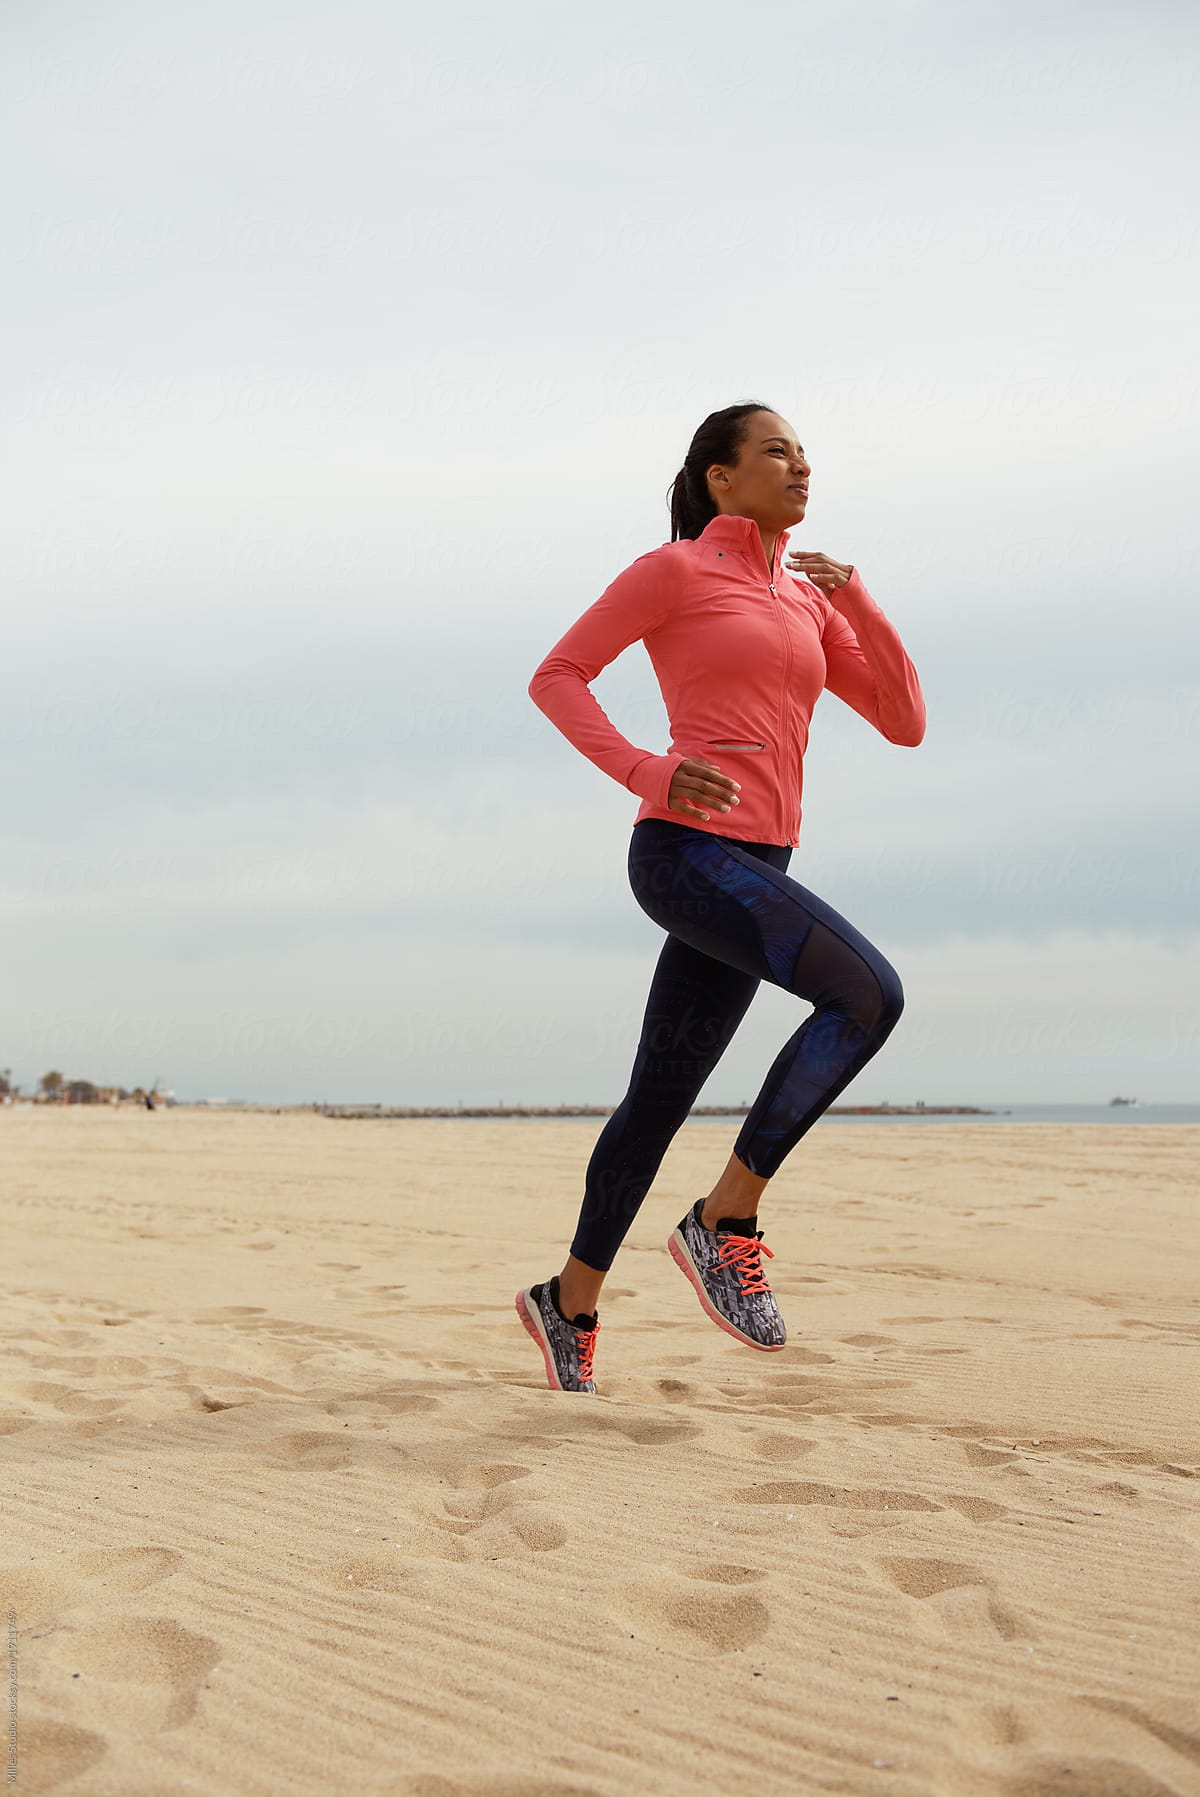 Sportive Black Woman Running On Sand by Stocksy Contributor Milles  Studio - Stocksy